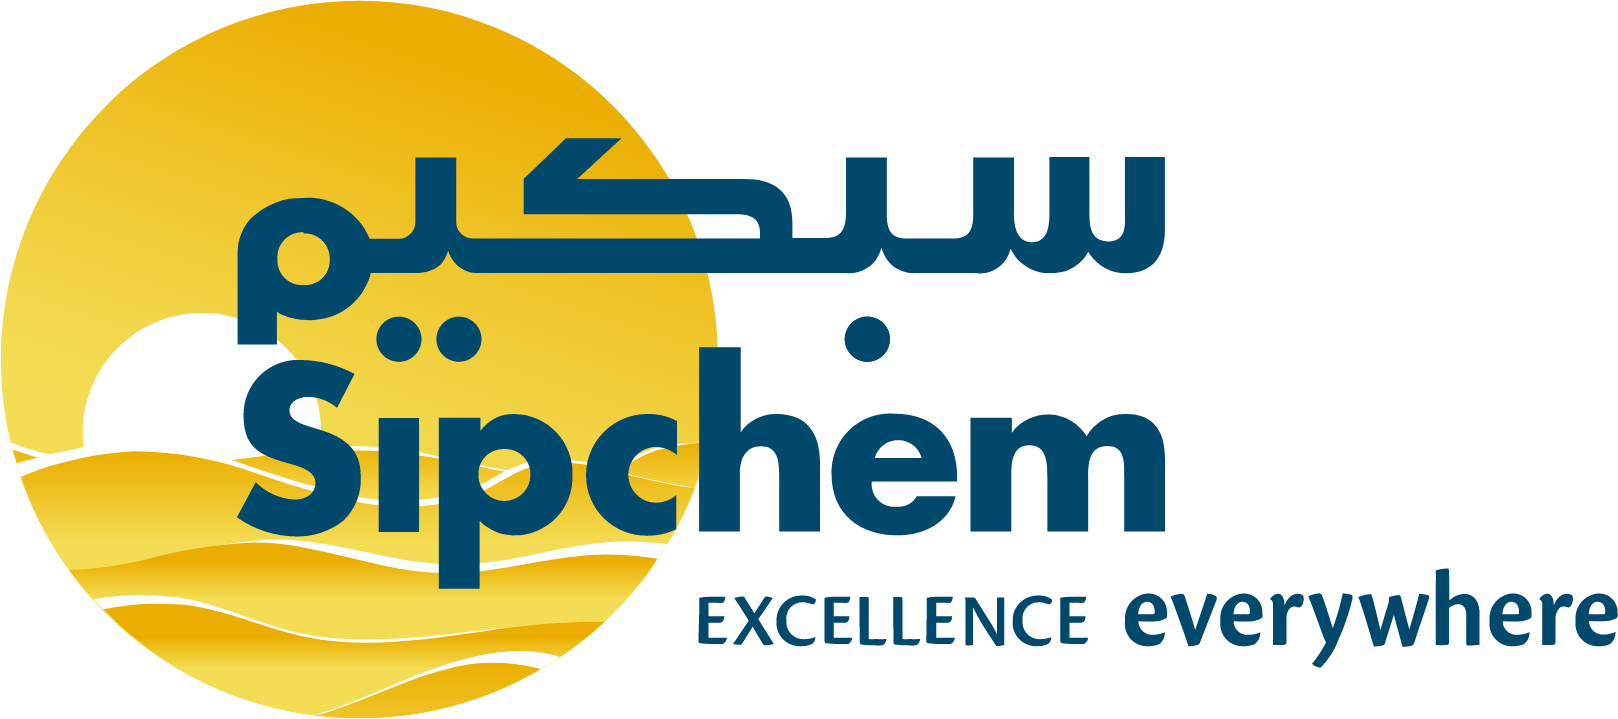 Saudi International Petrochemical Company (Sipchem) logo large (transparent PNG)